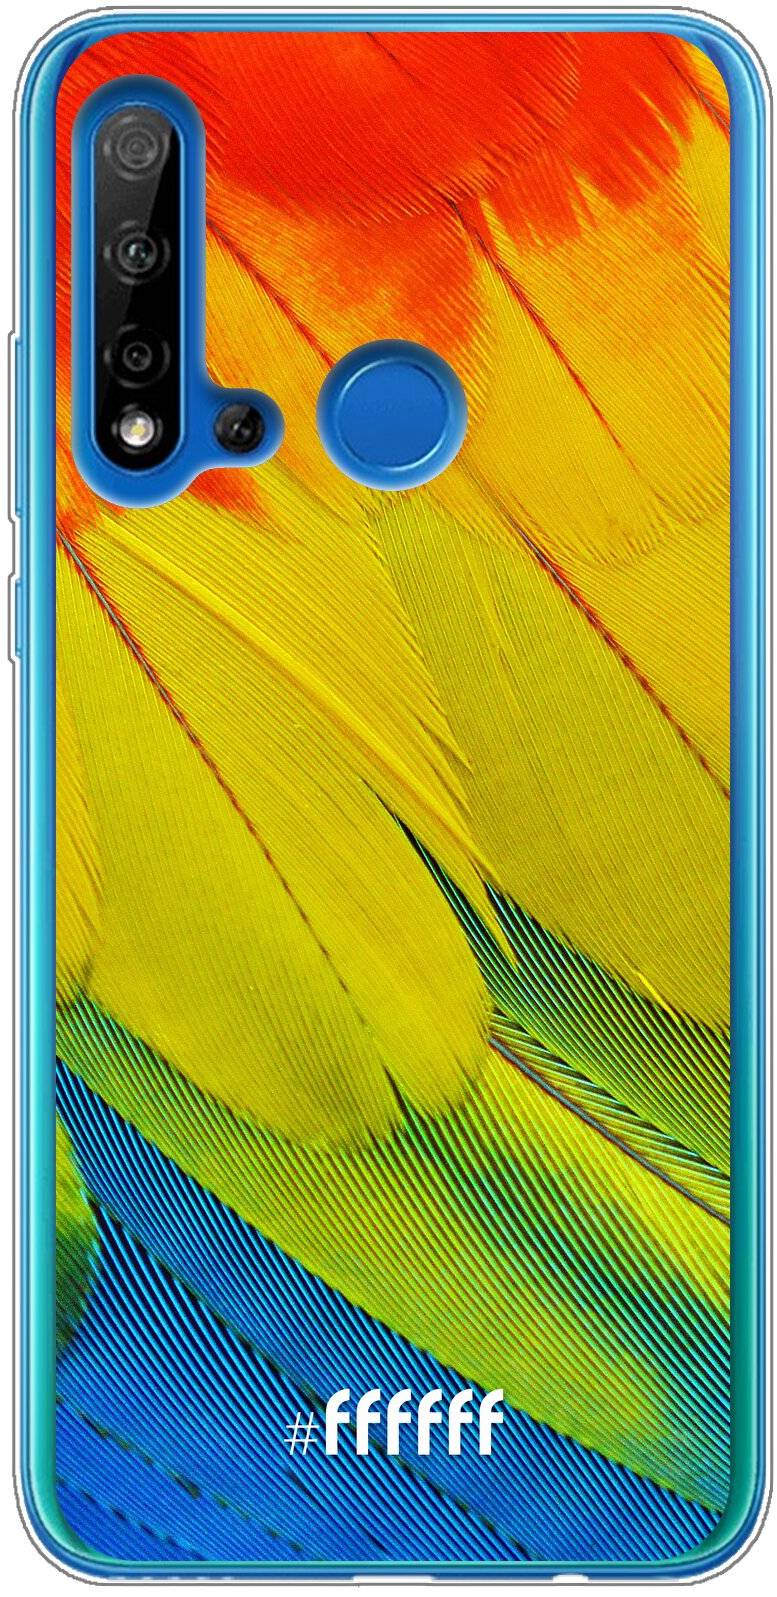 Macaw Hues P20 Lite (2019)